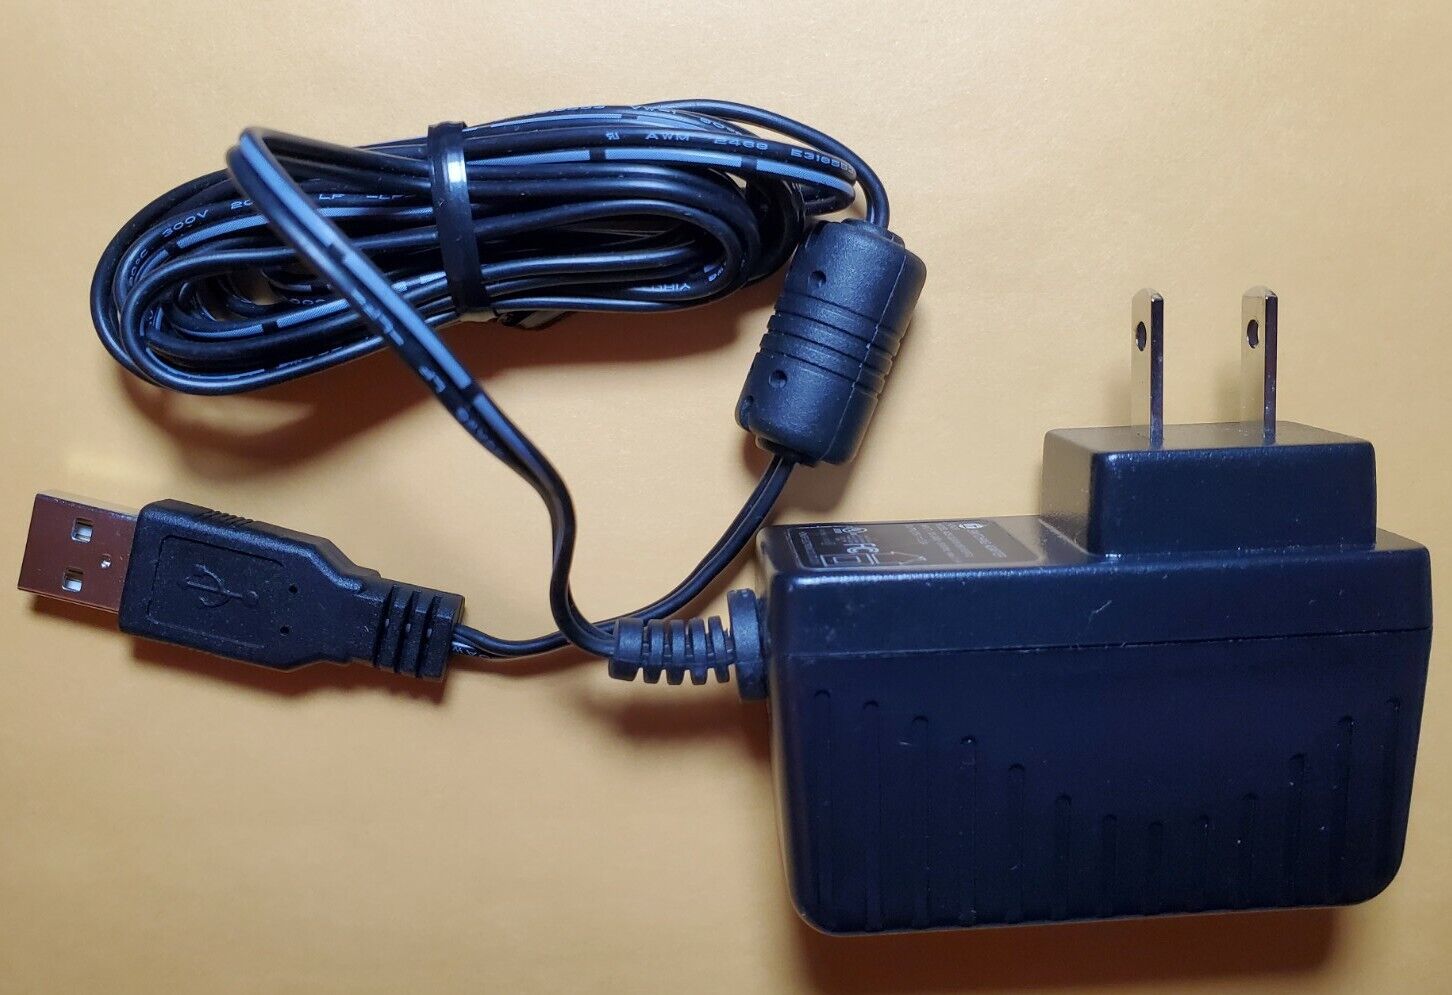 Adapter charger For EverStart Maxx SL10LEDE 2200 Lumen LED Spotlight Type AC/DC Adapter Connection Split/Duplication 1: